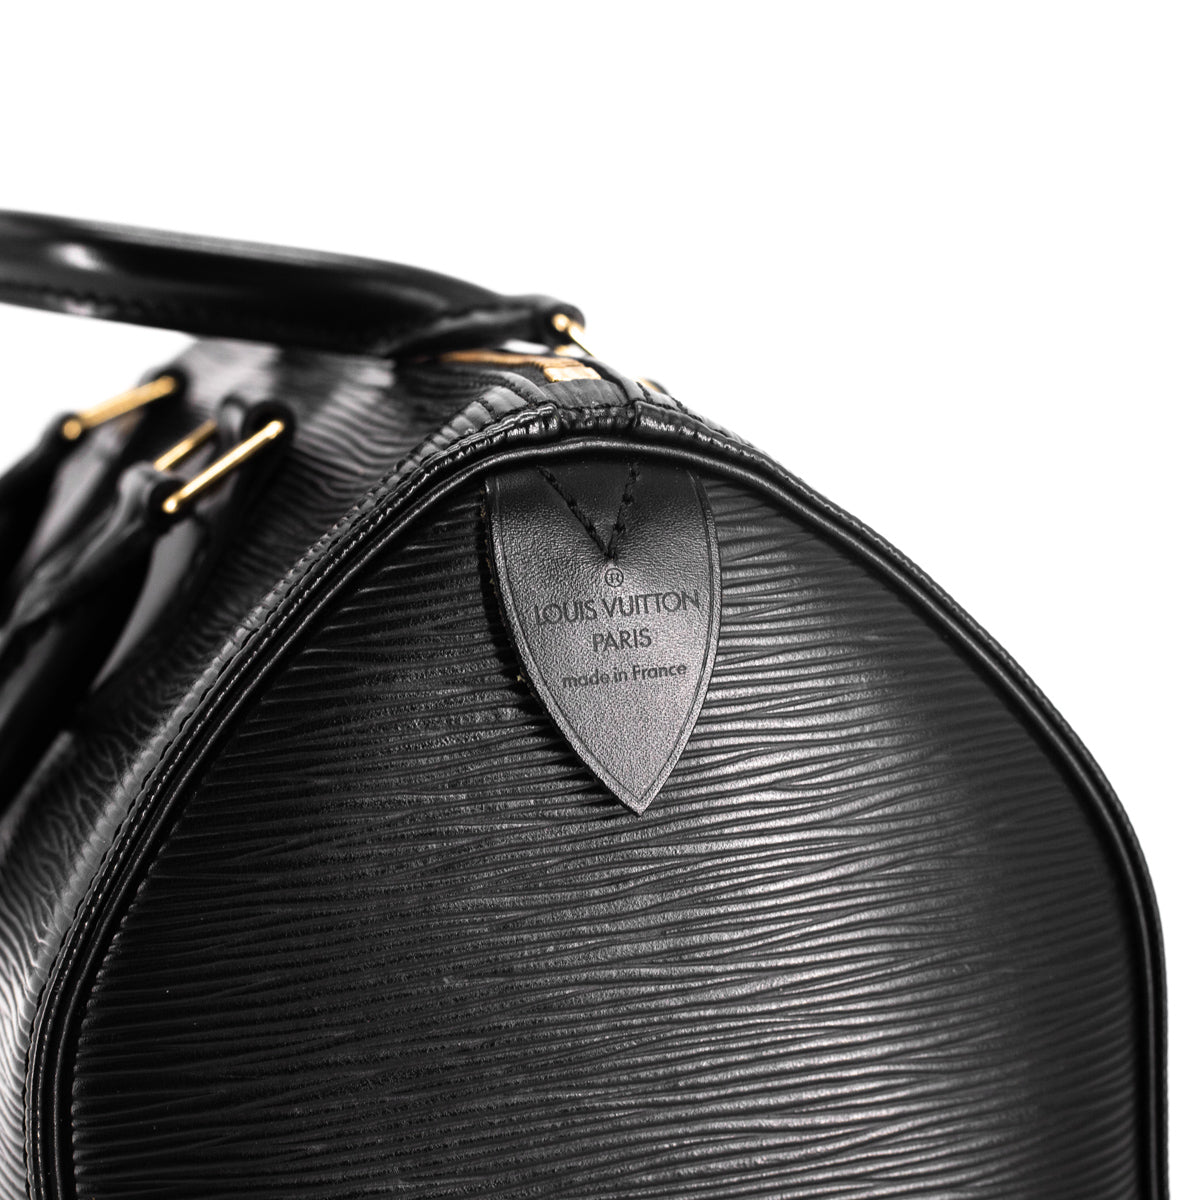 LOUIS VUITTON Black Epi Leather Speedy 25 Satchel Handbag